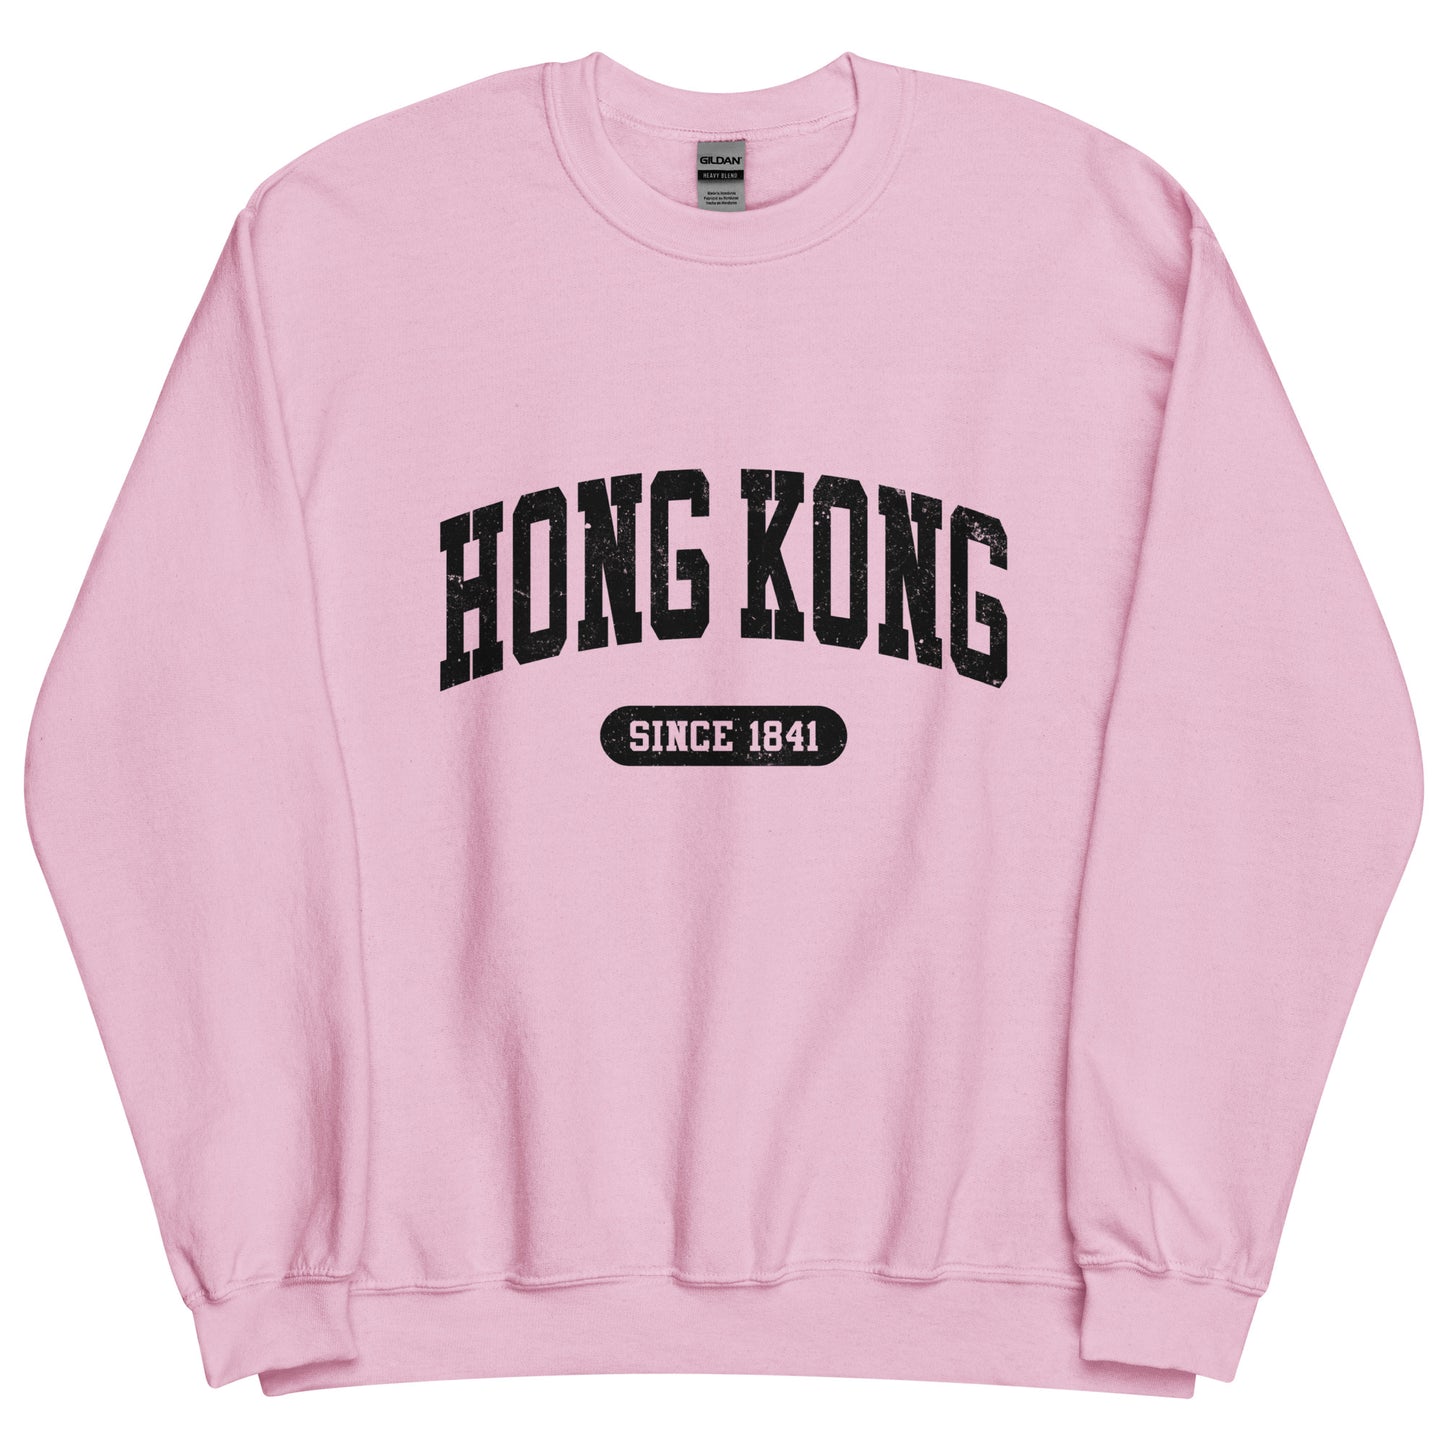 Hong Kong Since 1841 | Unisex Sweatshirt